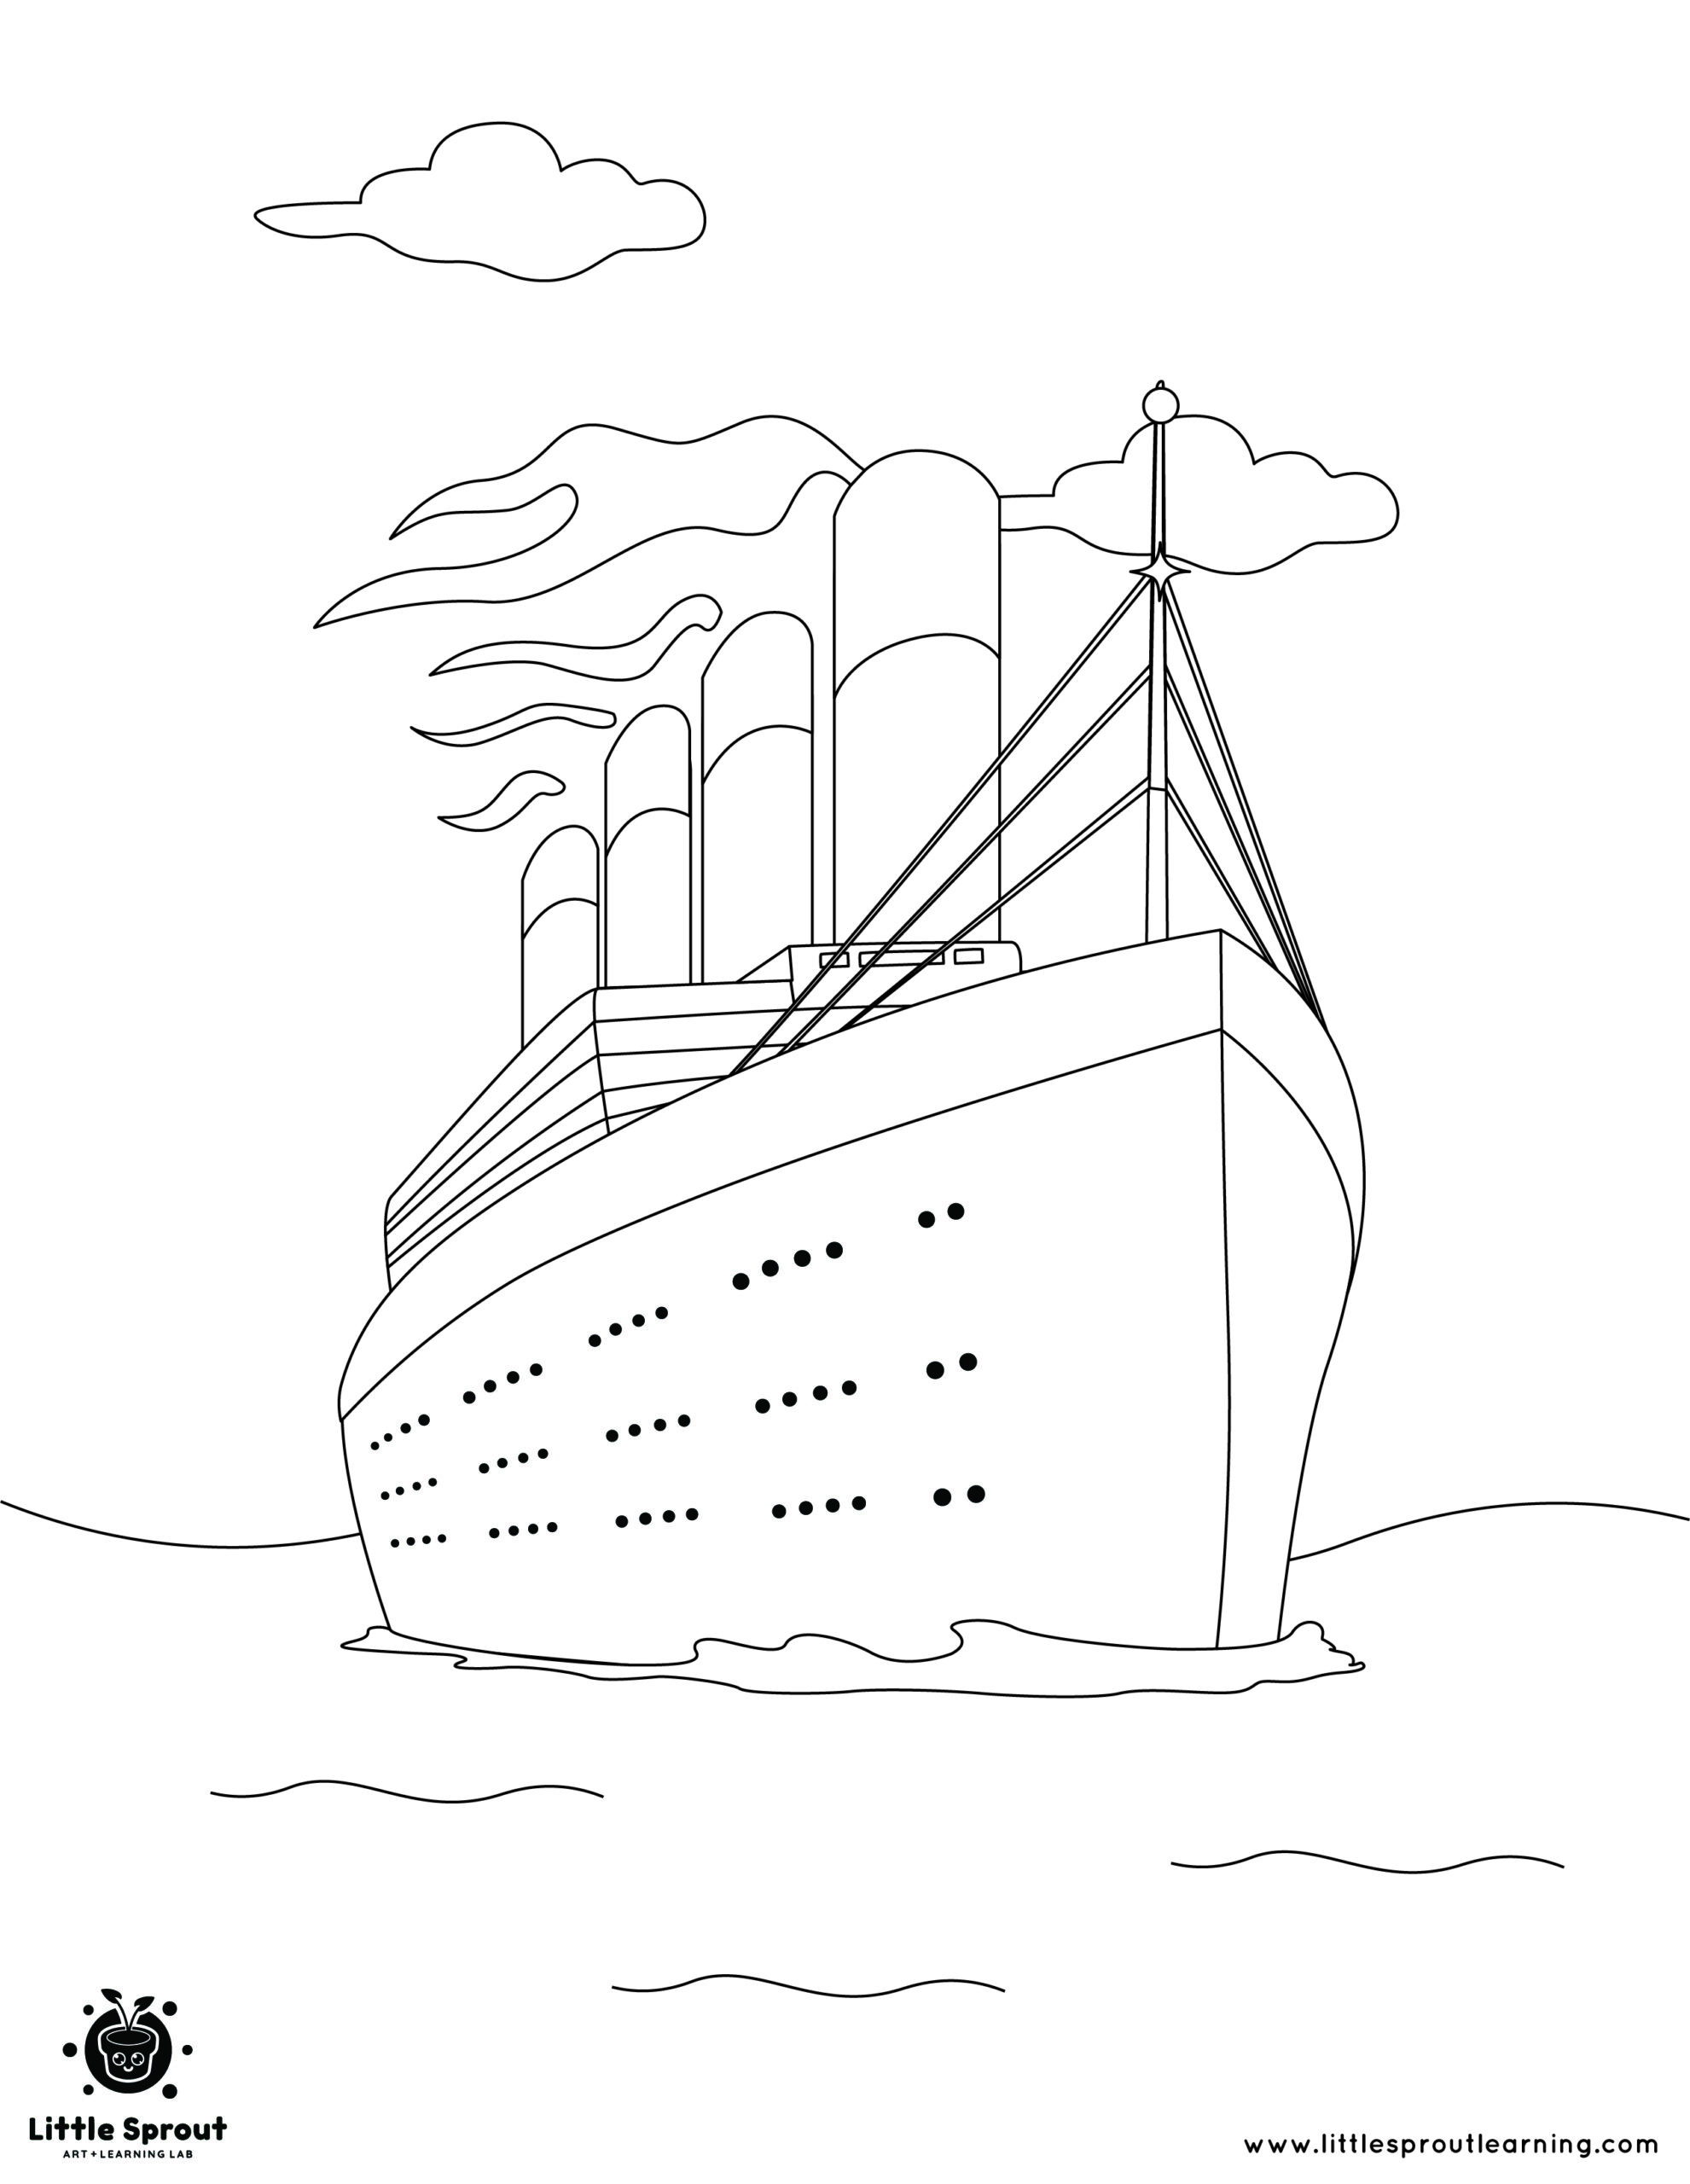 Titanic Sailing Across The Ocean ...